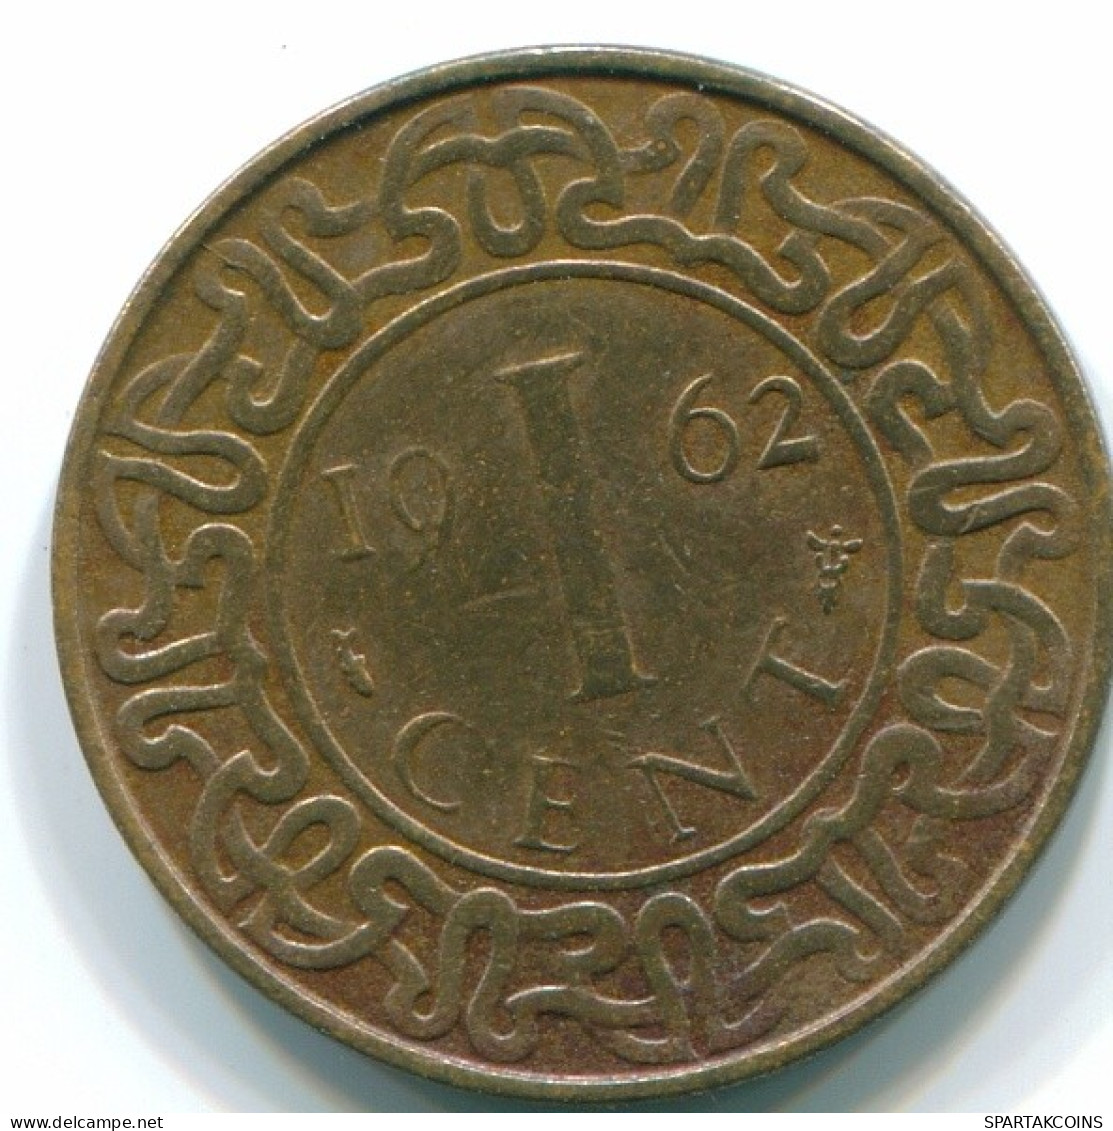 1 CENT 1962 SURINAME Netherlands Bronze Fish Colonial Coin #S10902.U.A - Surinam 1975 - ...